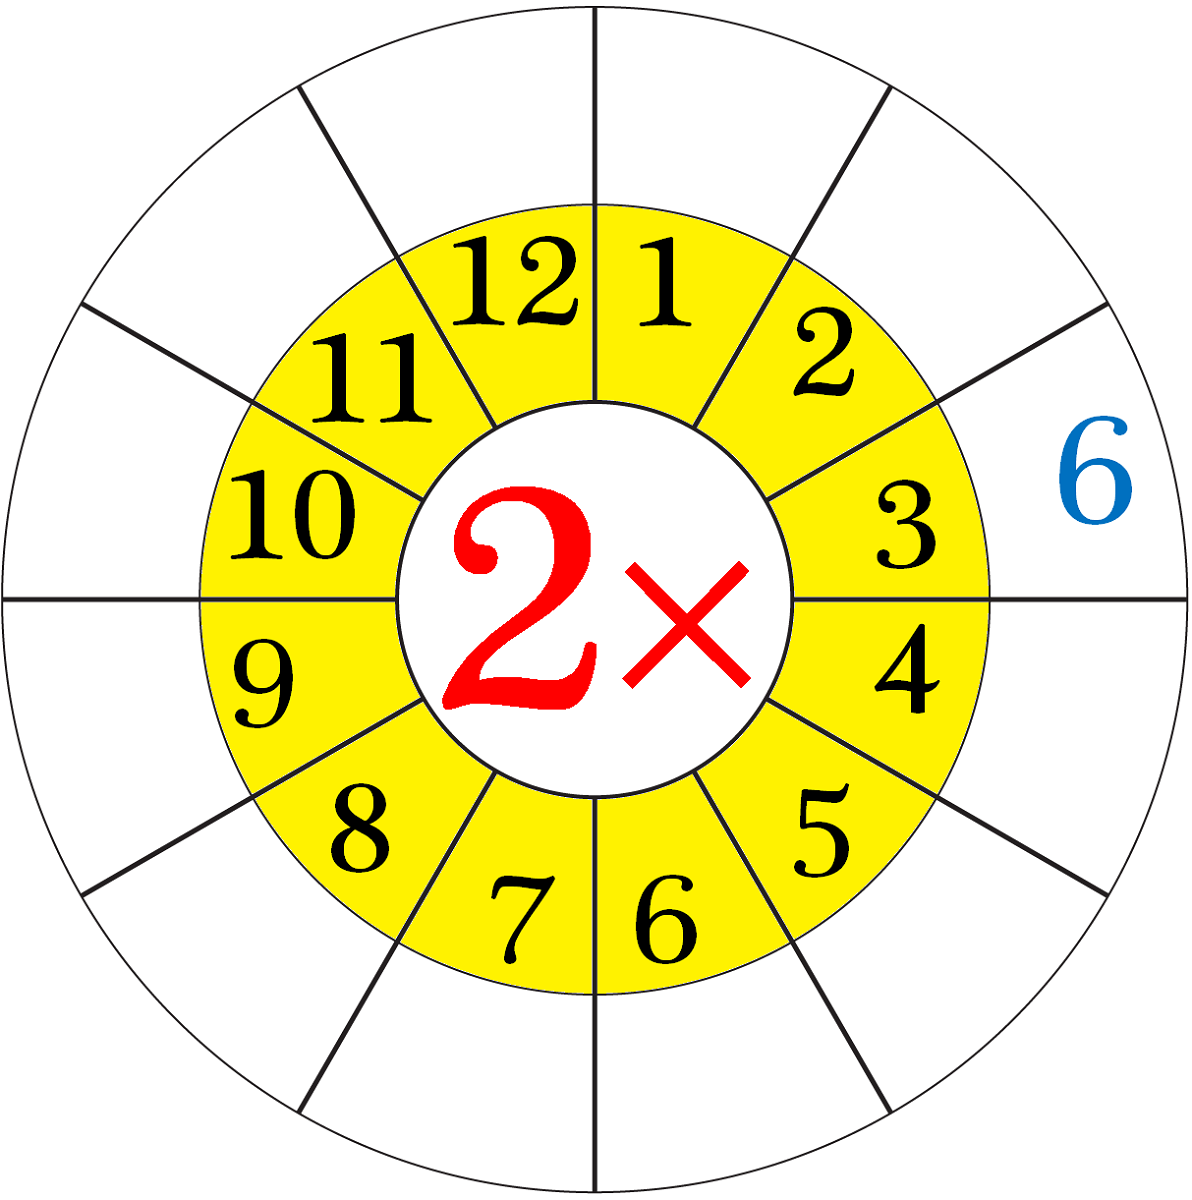 multiply-by-2-worksheet-circle